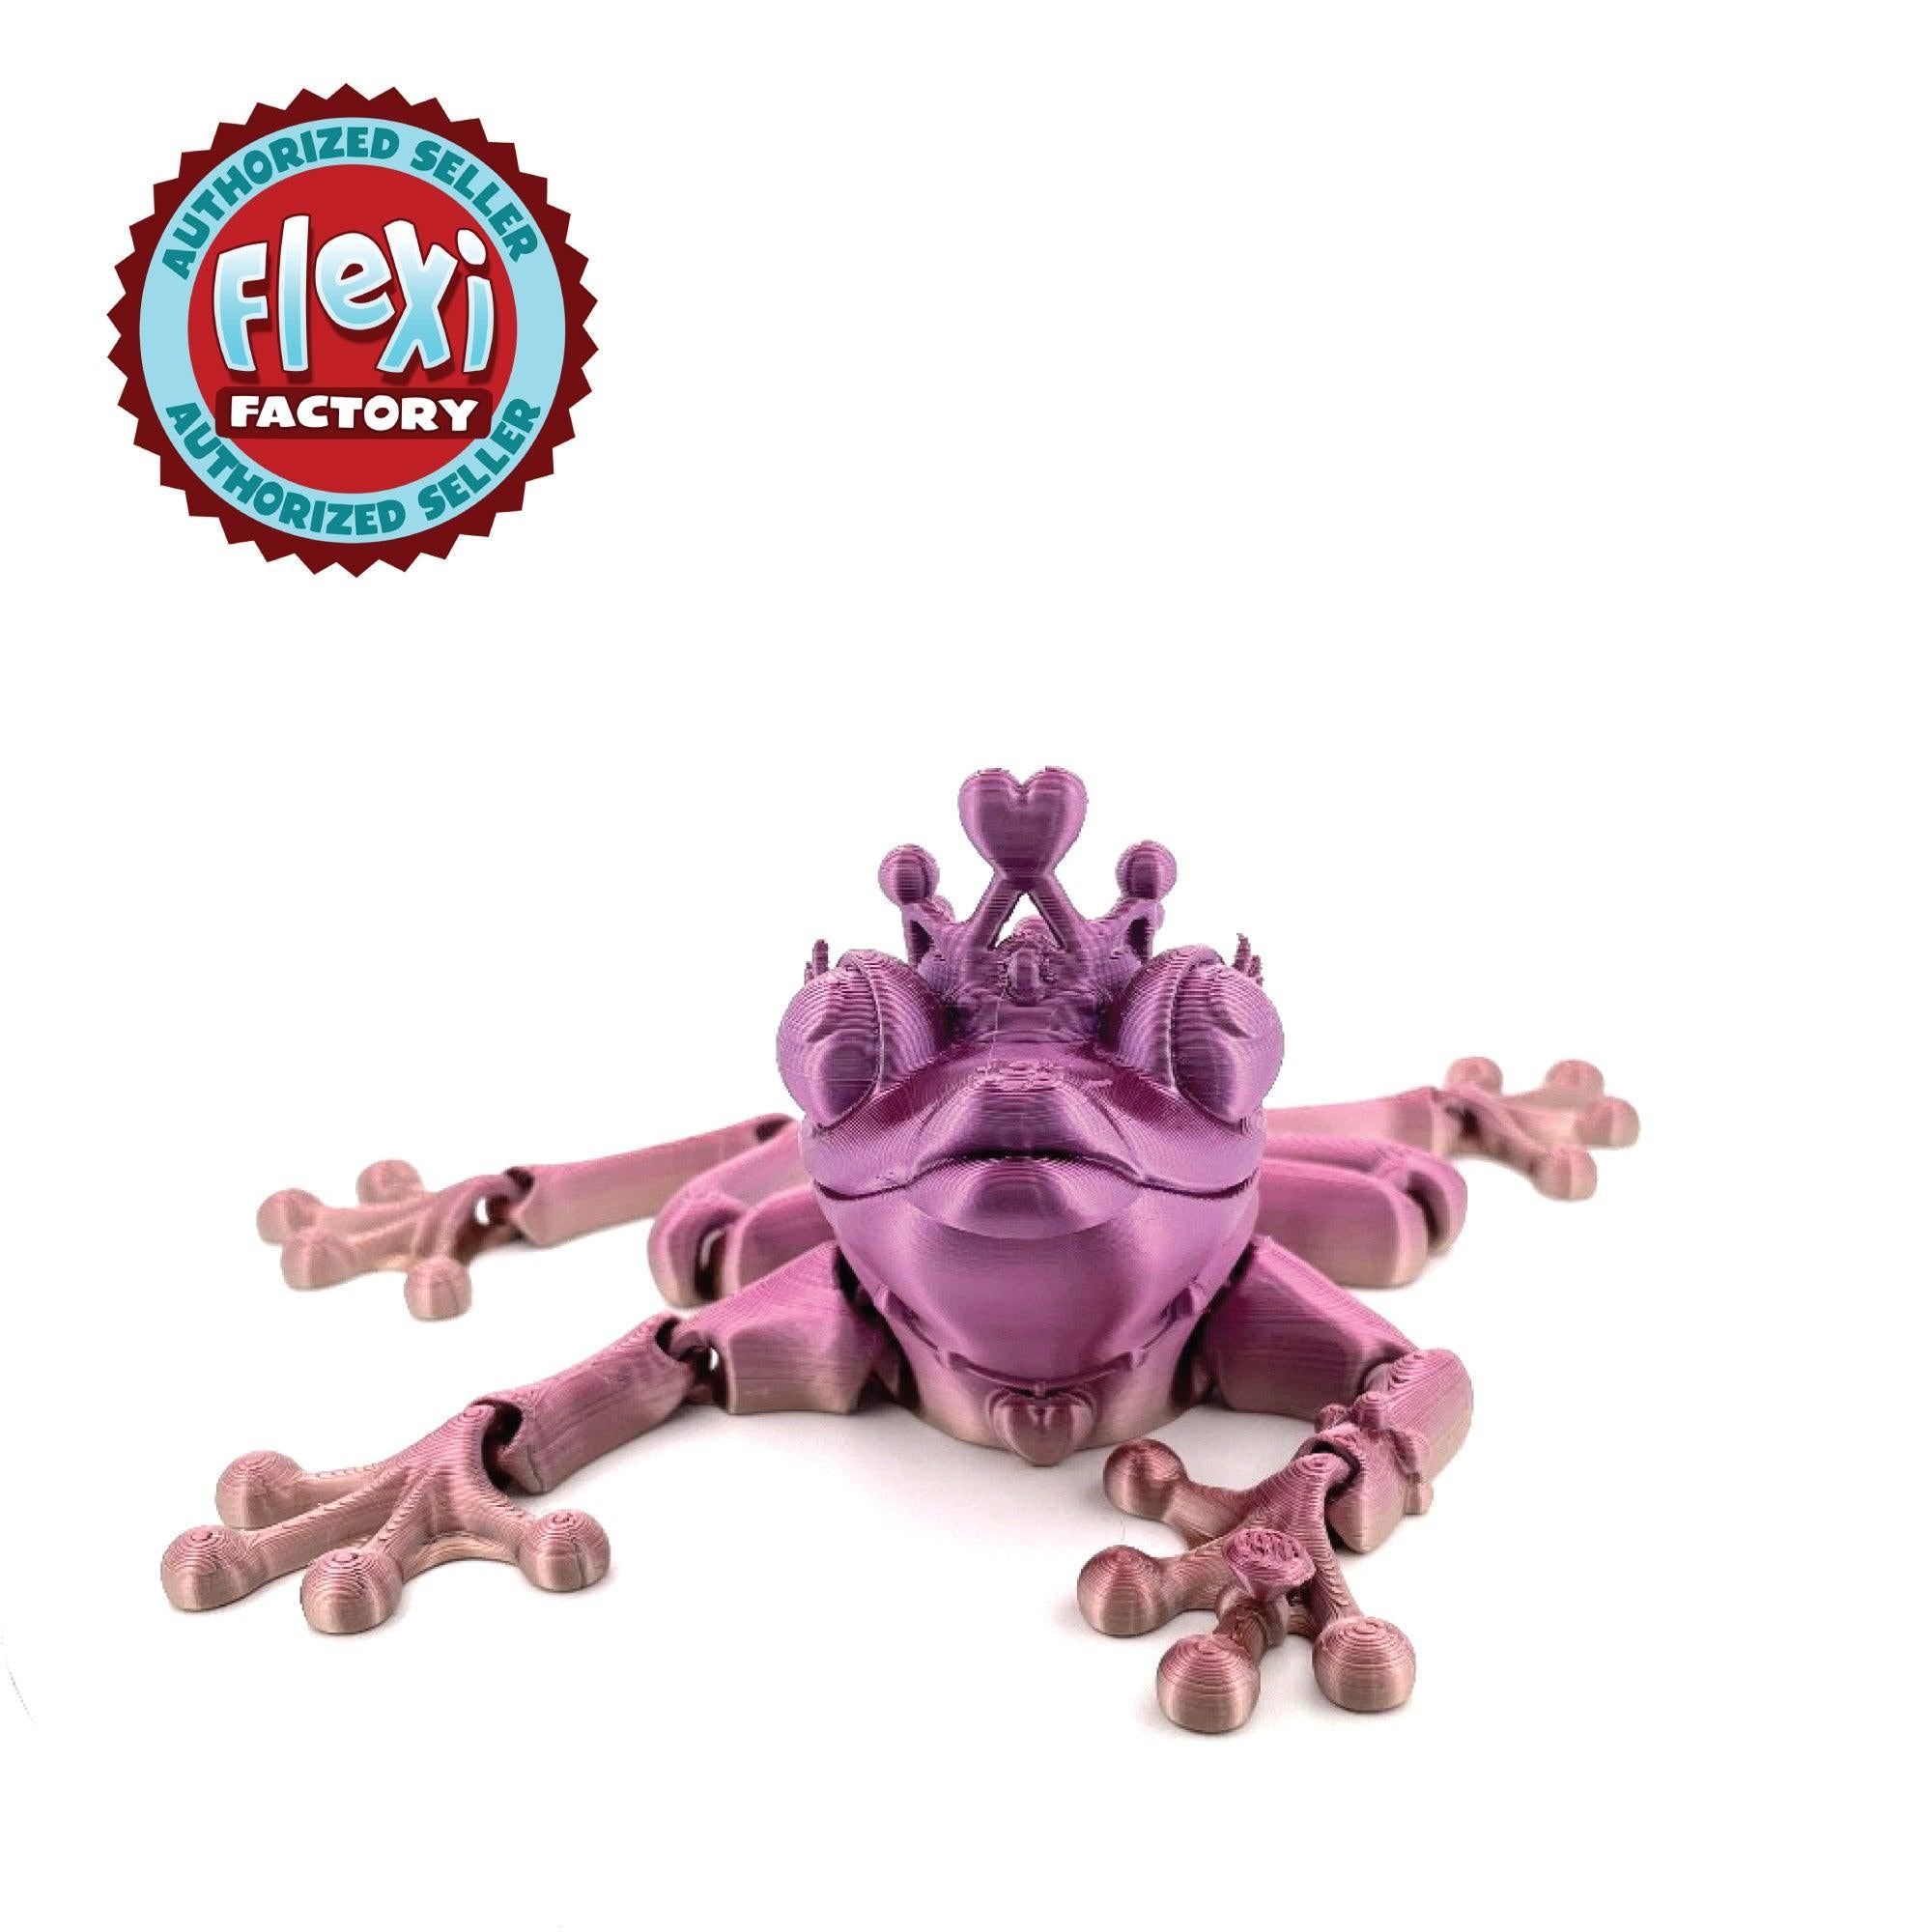 Articulated Frog Princess - Printibly